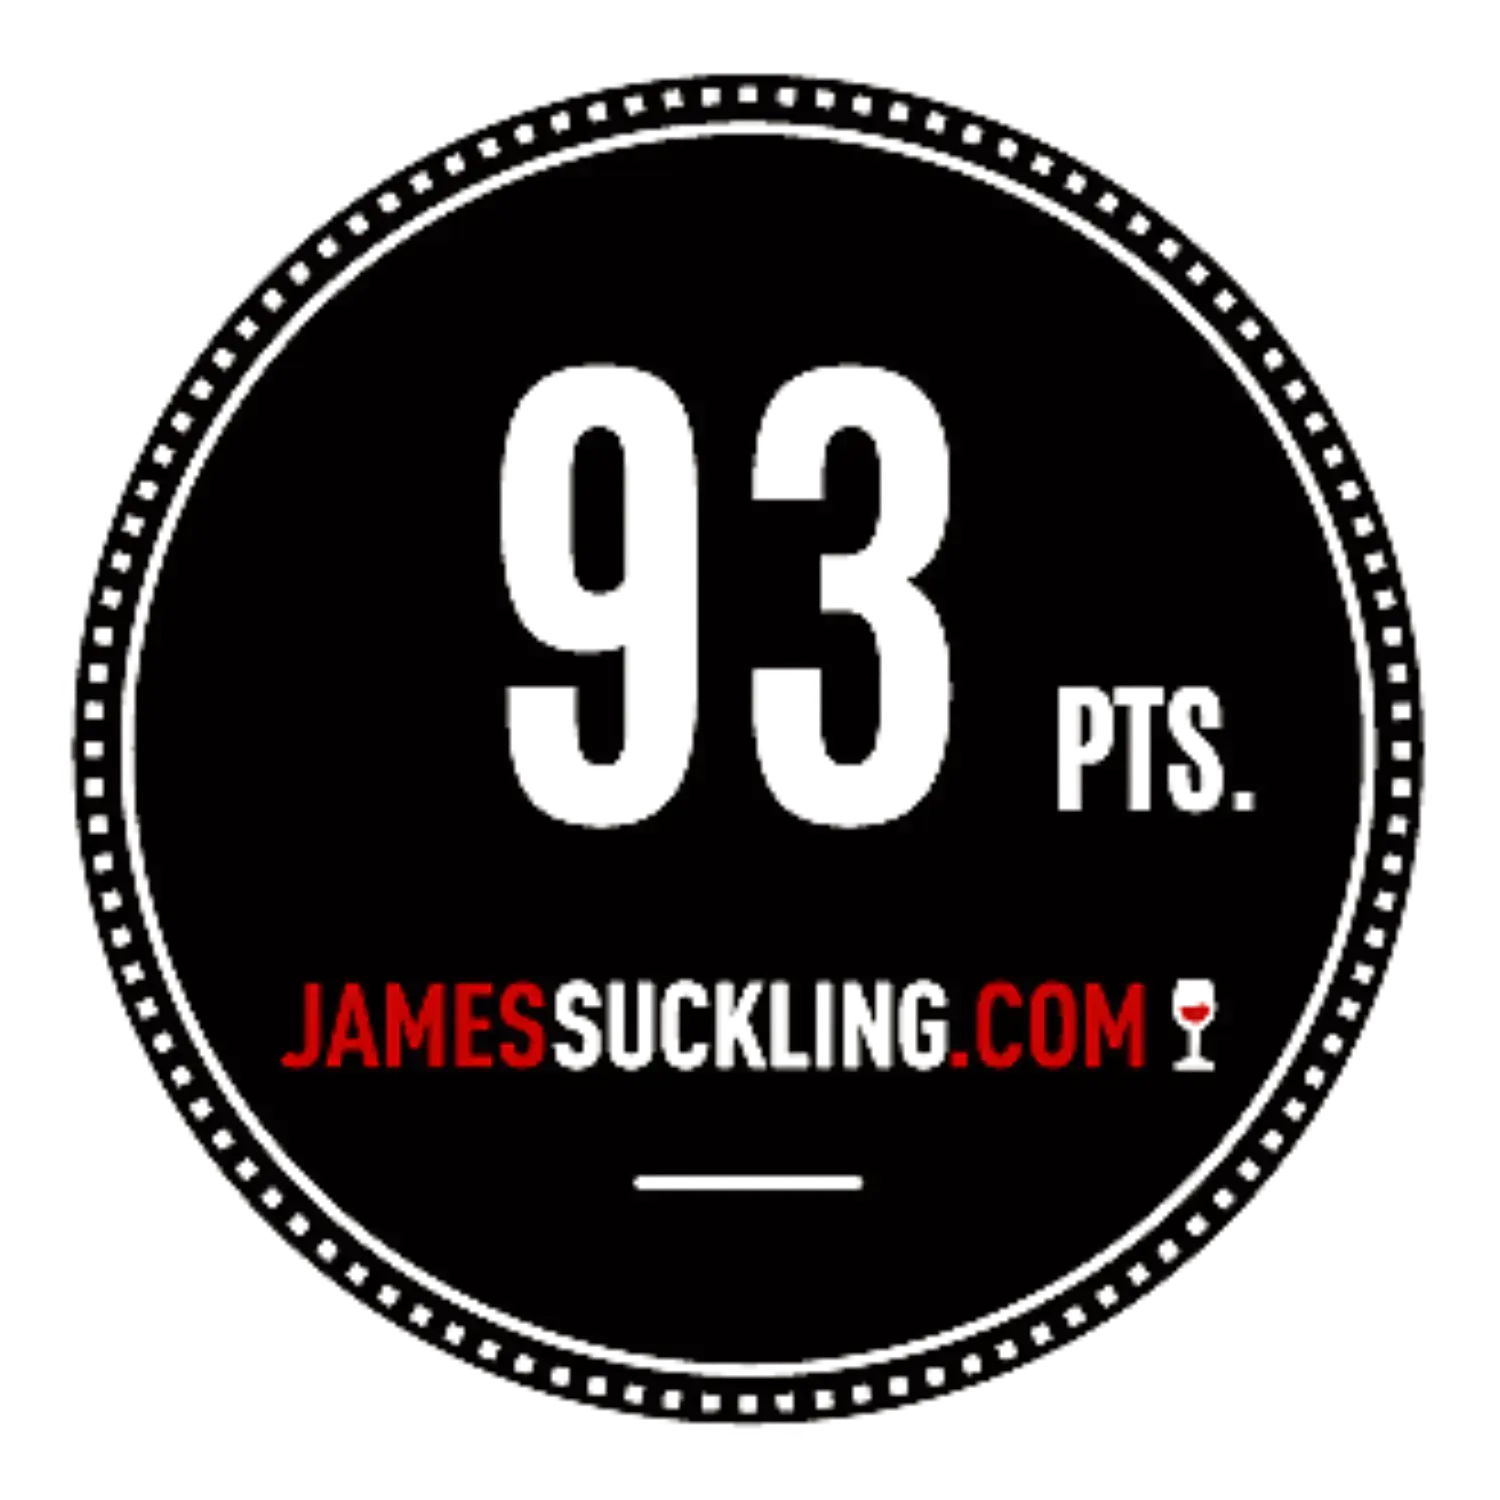 Sigla cu fundal negru si numarul de puncte in culoare alba reprezentand premiul James Suckling 93 puncte